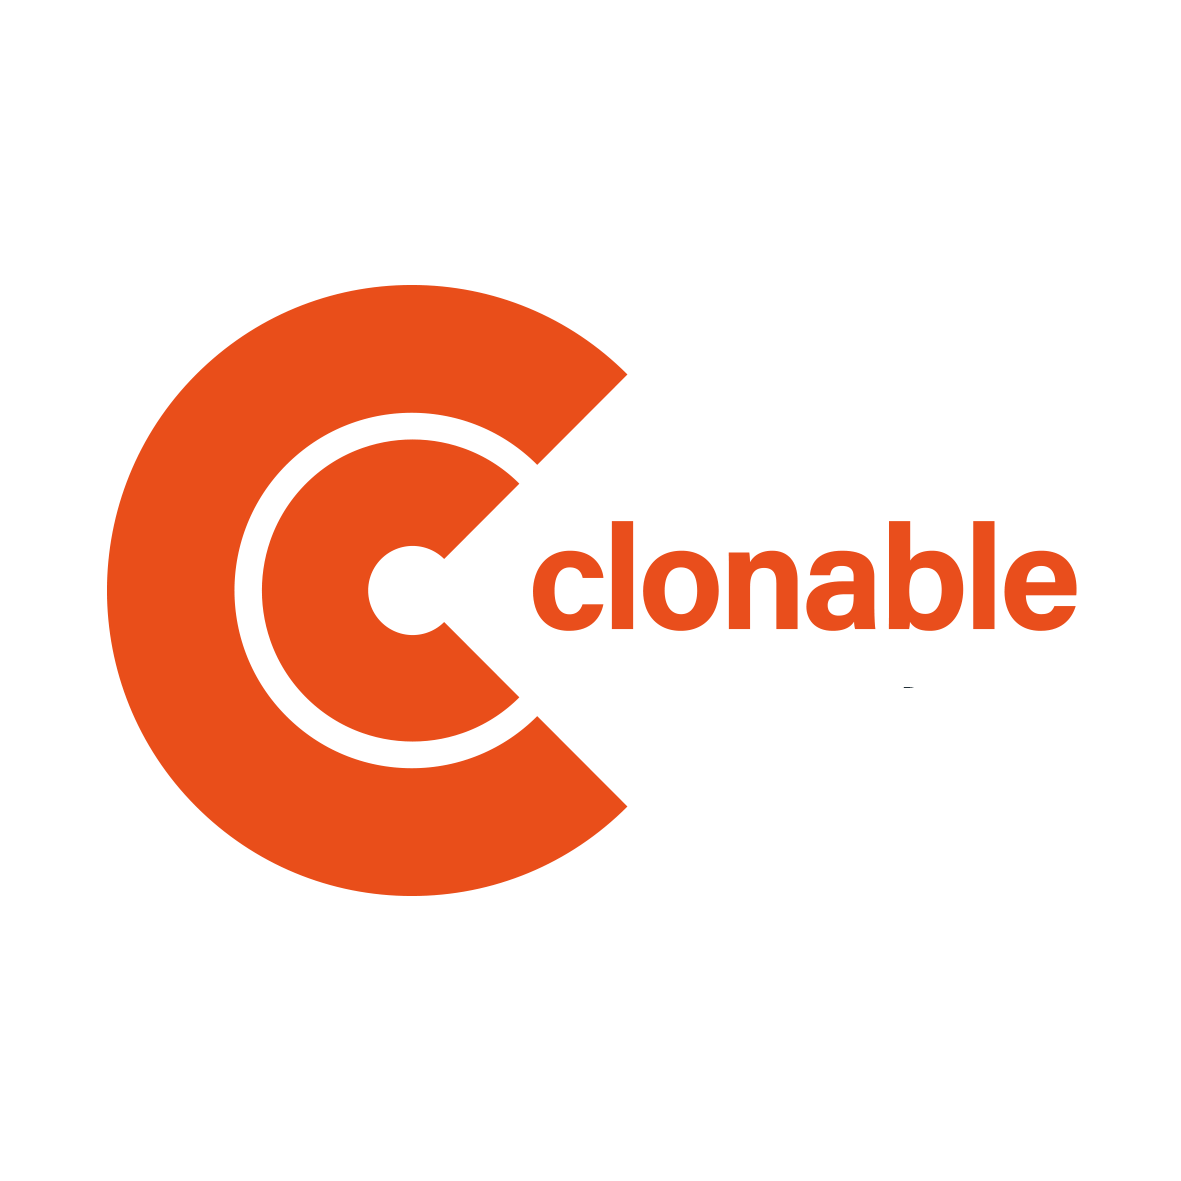 Clonable logo açık arka plan